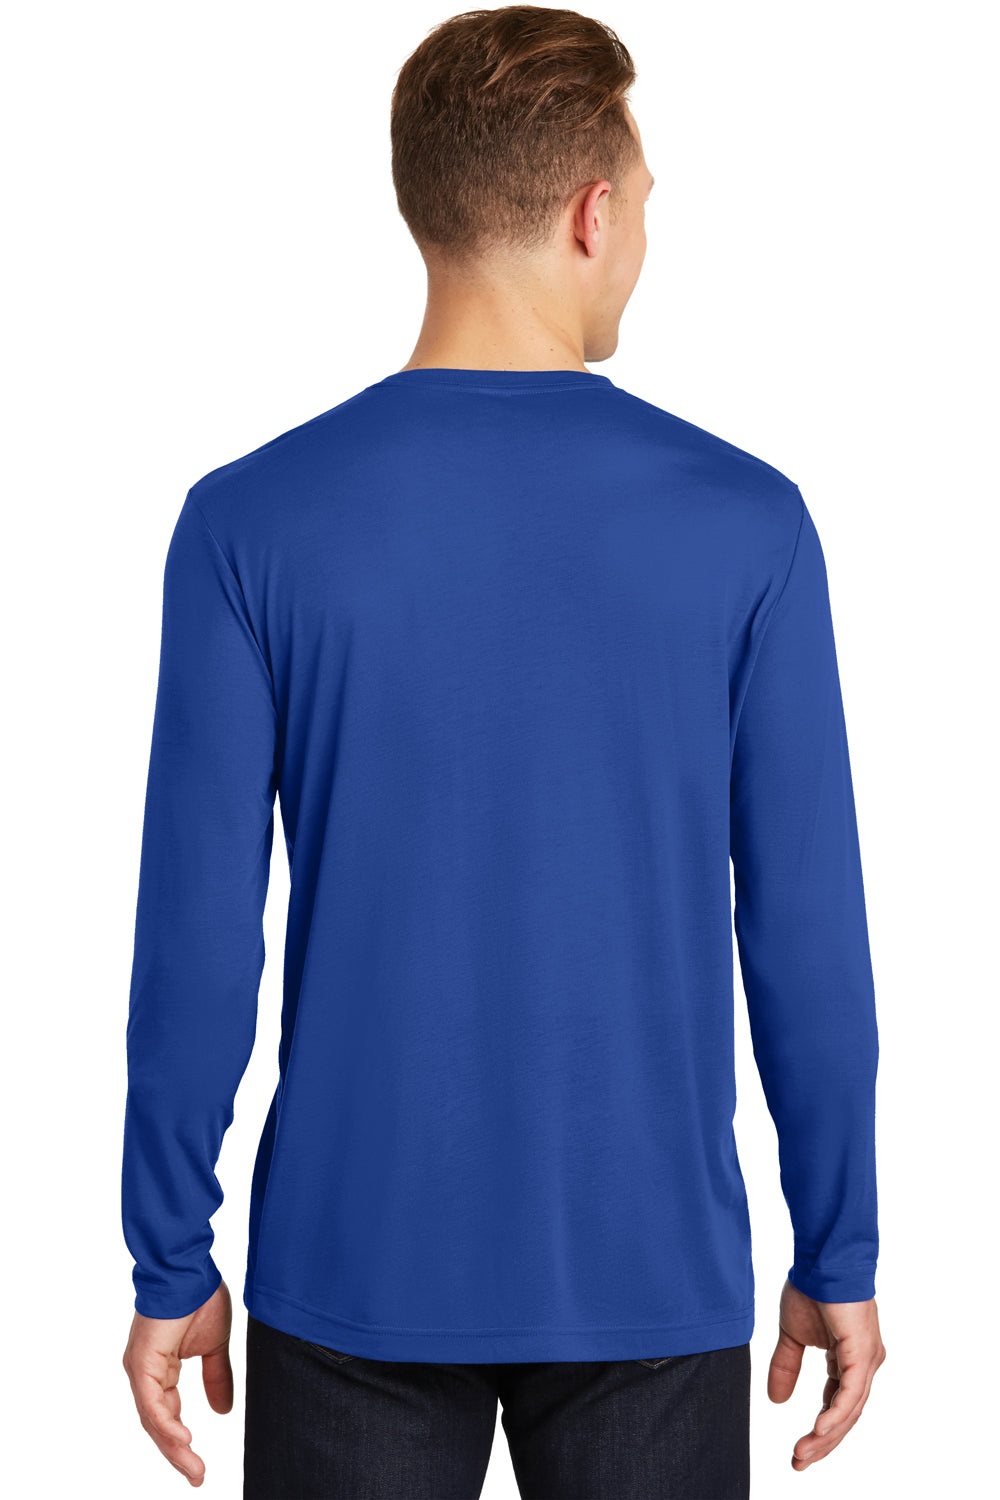 Sport-Tek ST450LS Mens Competitor Moisture Wicking Long Sleeve Crewneck T-Shirt Royal Blue Back